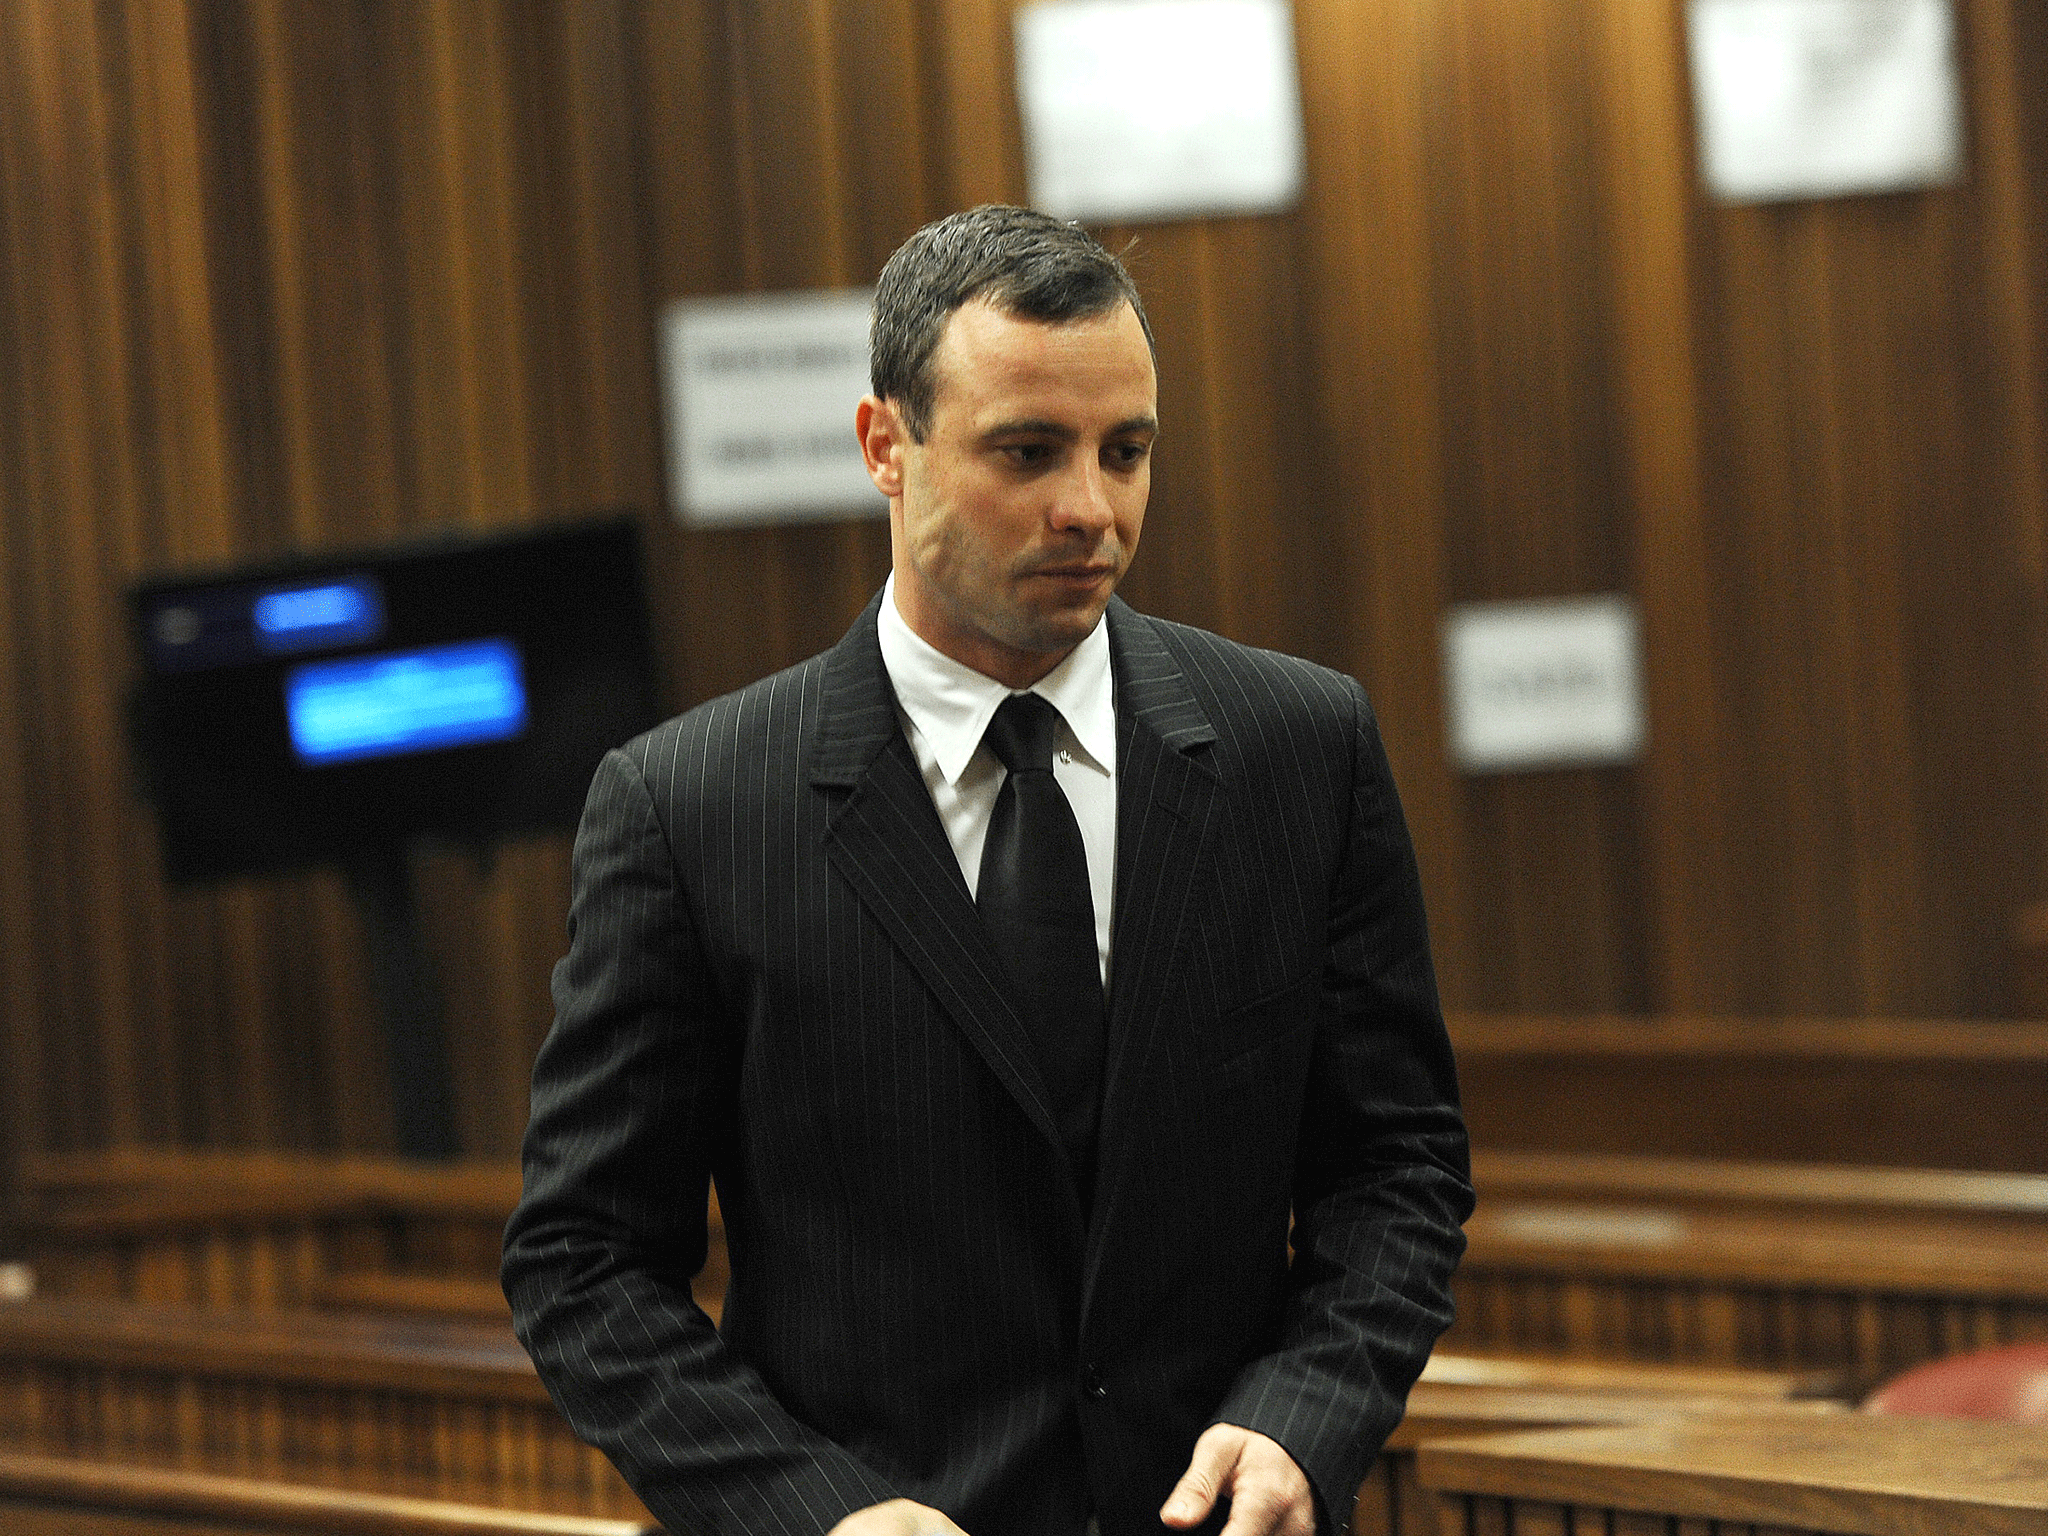 Oscar Pistorius stands accused of the murder of his girlfriend, Reeva Steenkamp